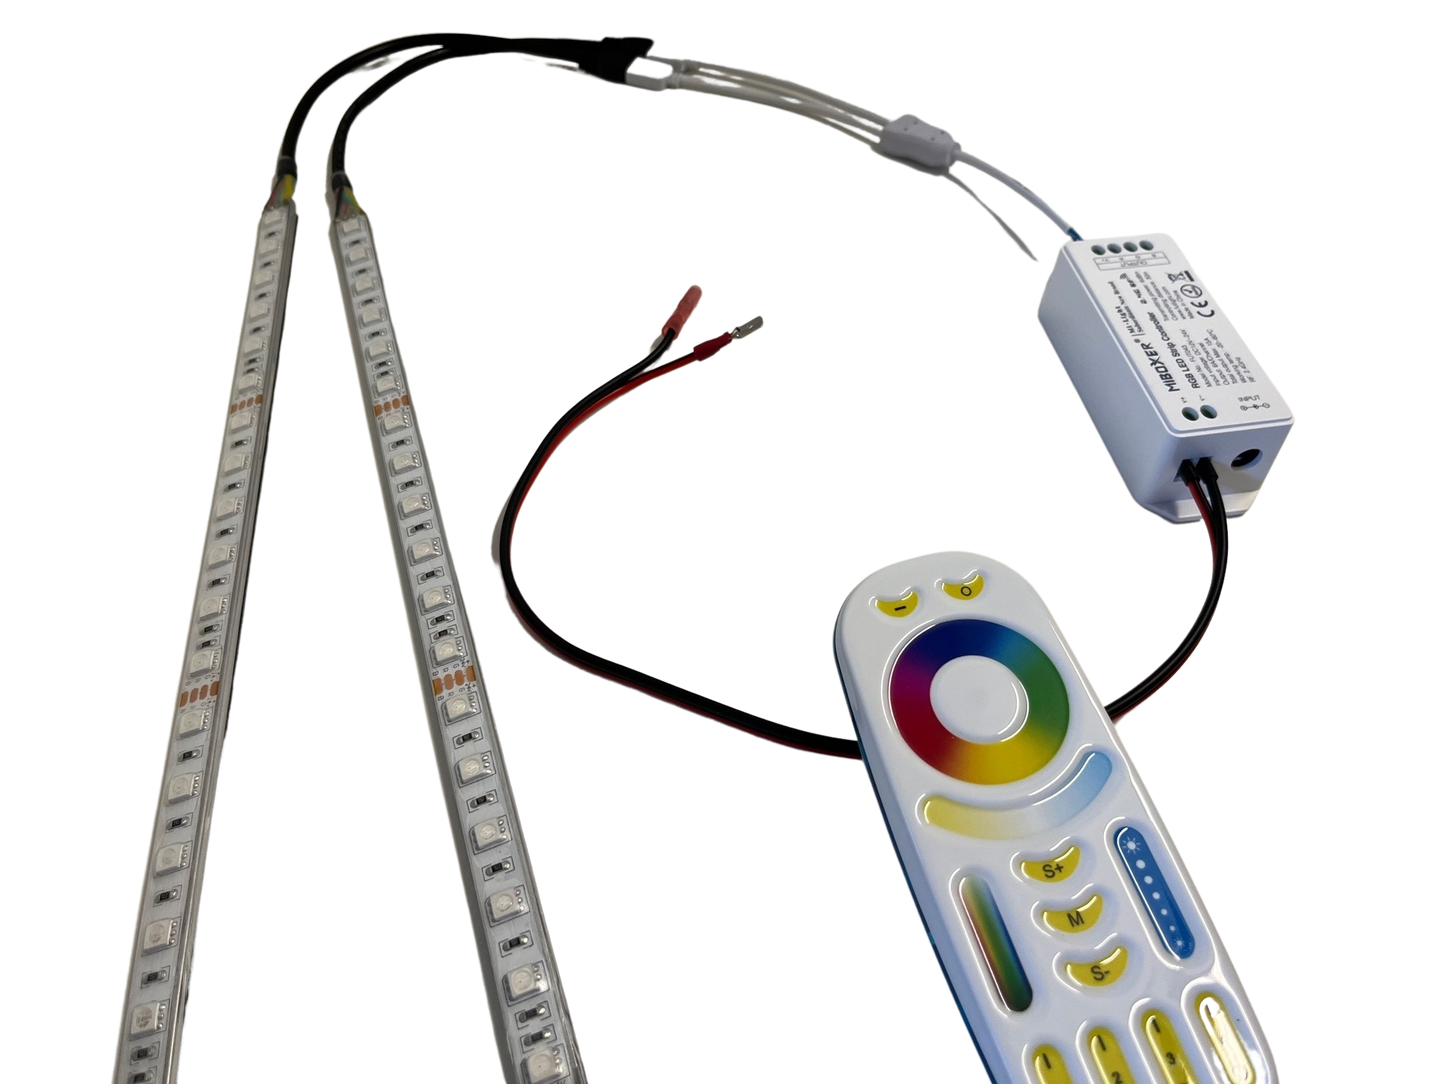 WMF Presto / Schaerer Factory usw. LED Seitenbeleuchtung Komplettset - Anschlussfertig